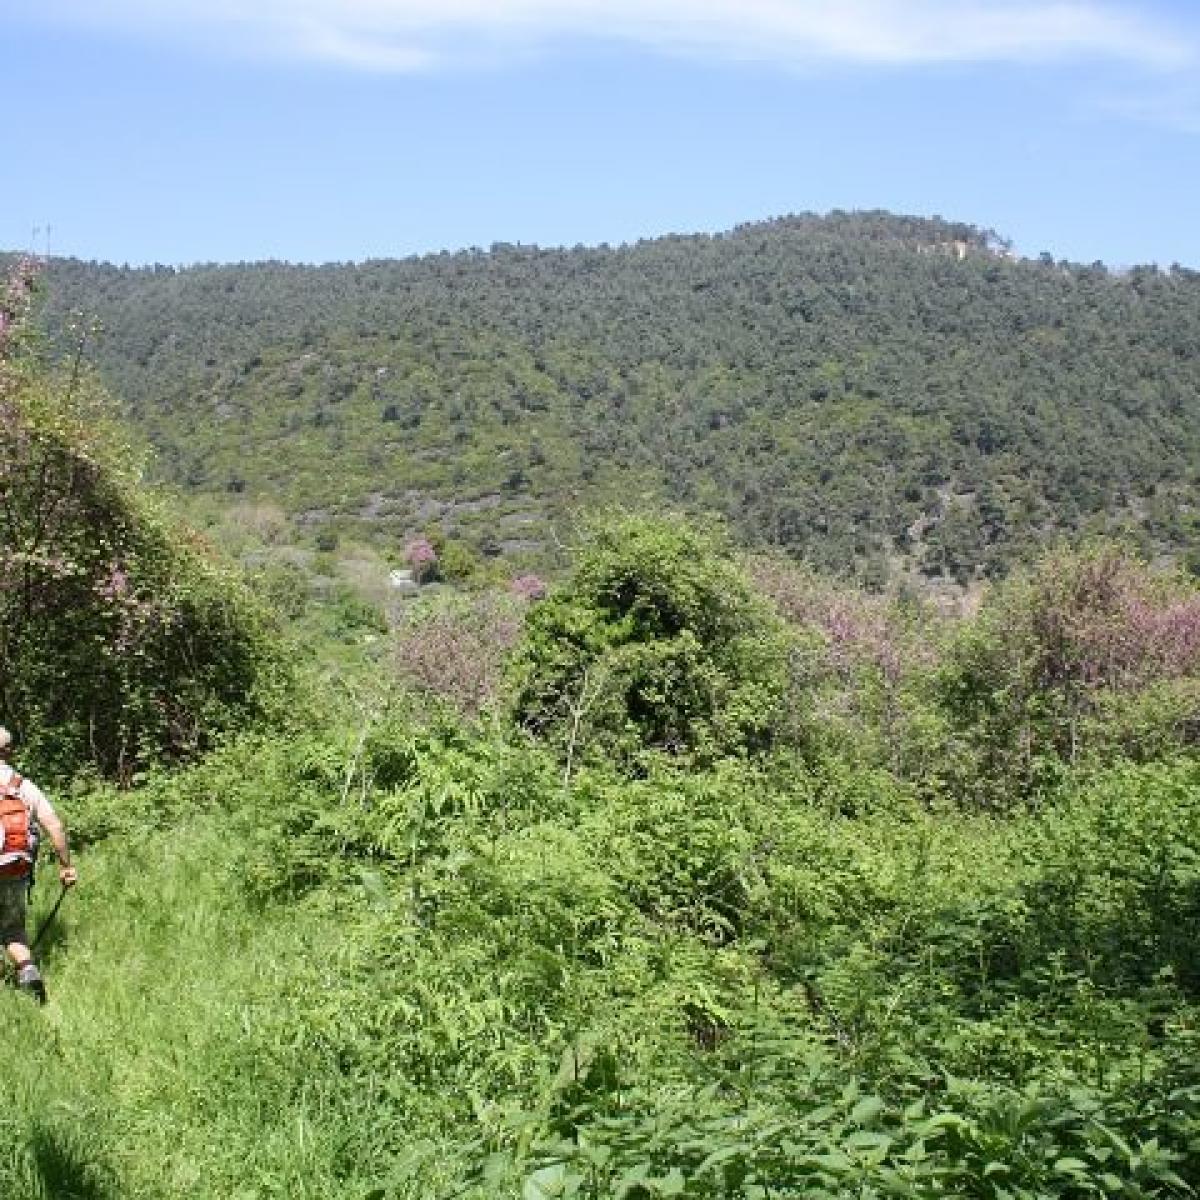 Herbal hiking with panoramic views